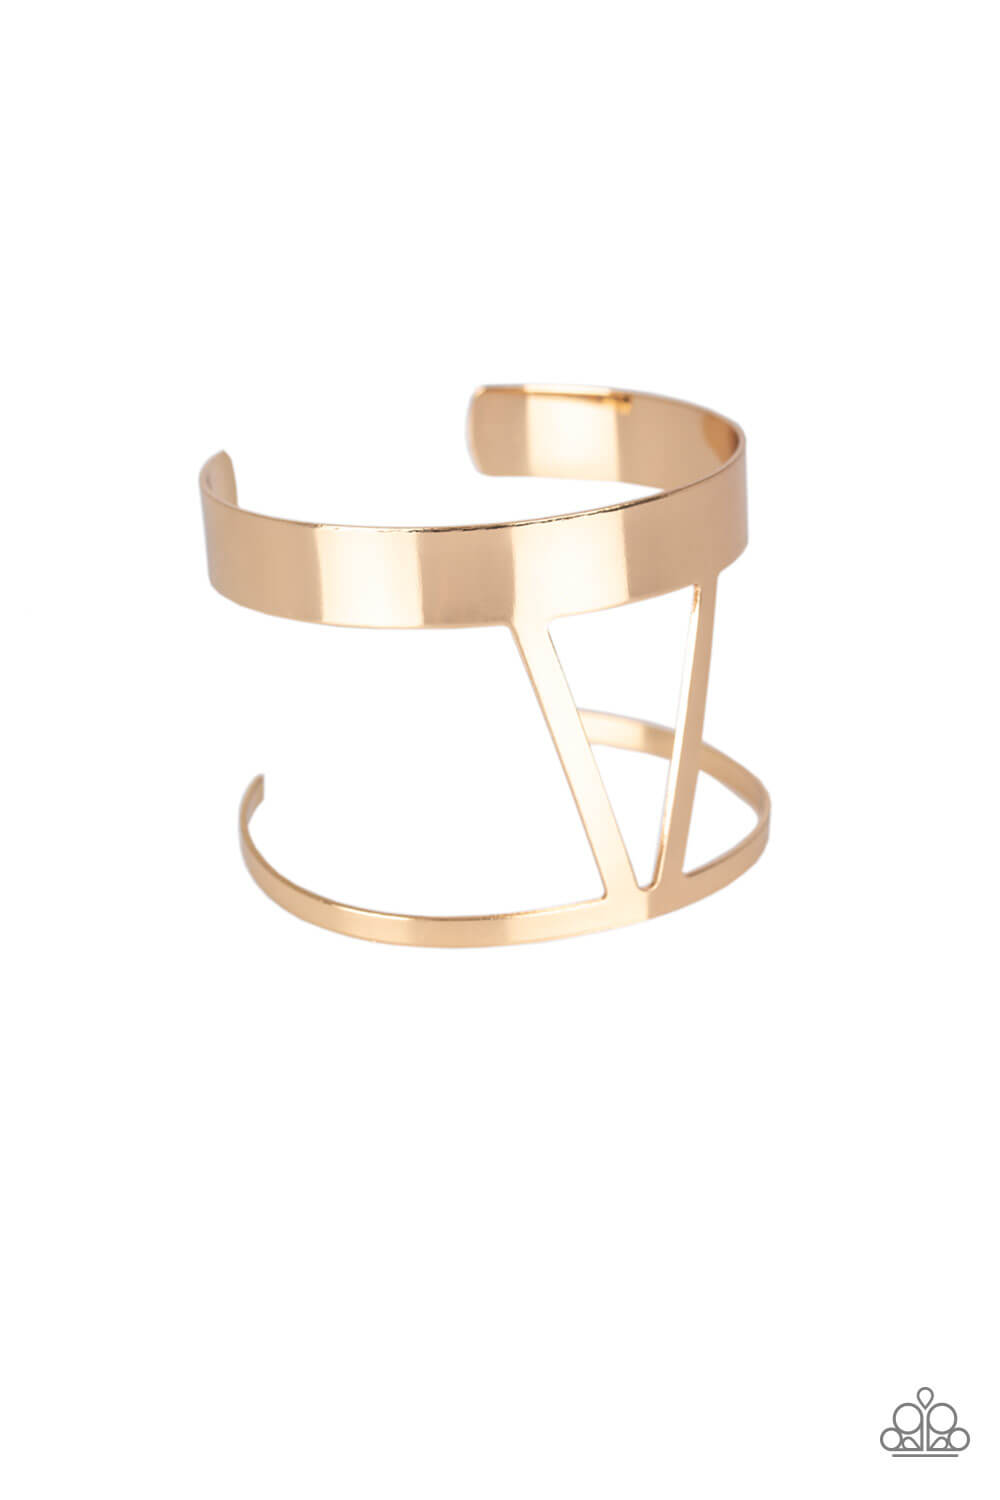 Rural Ruler - Gold Cuff Bracelet - Princess Glam Shop